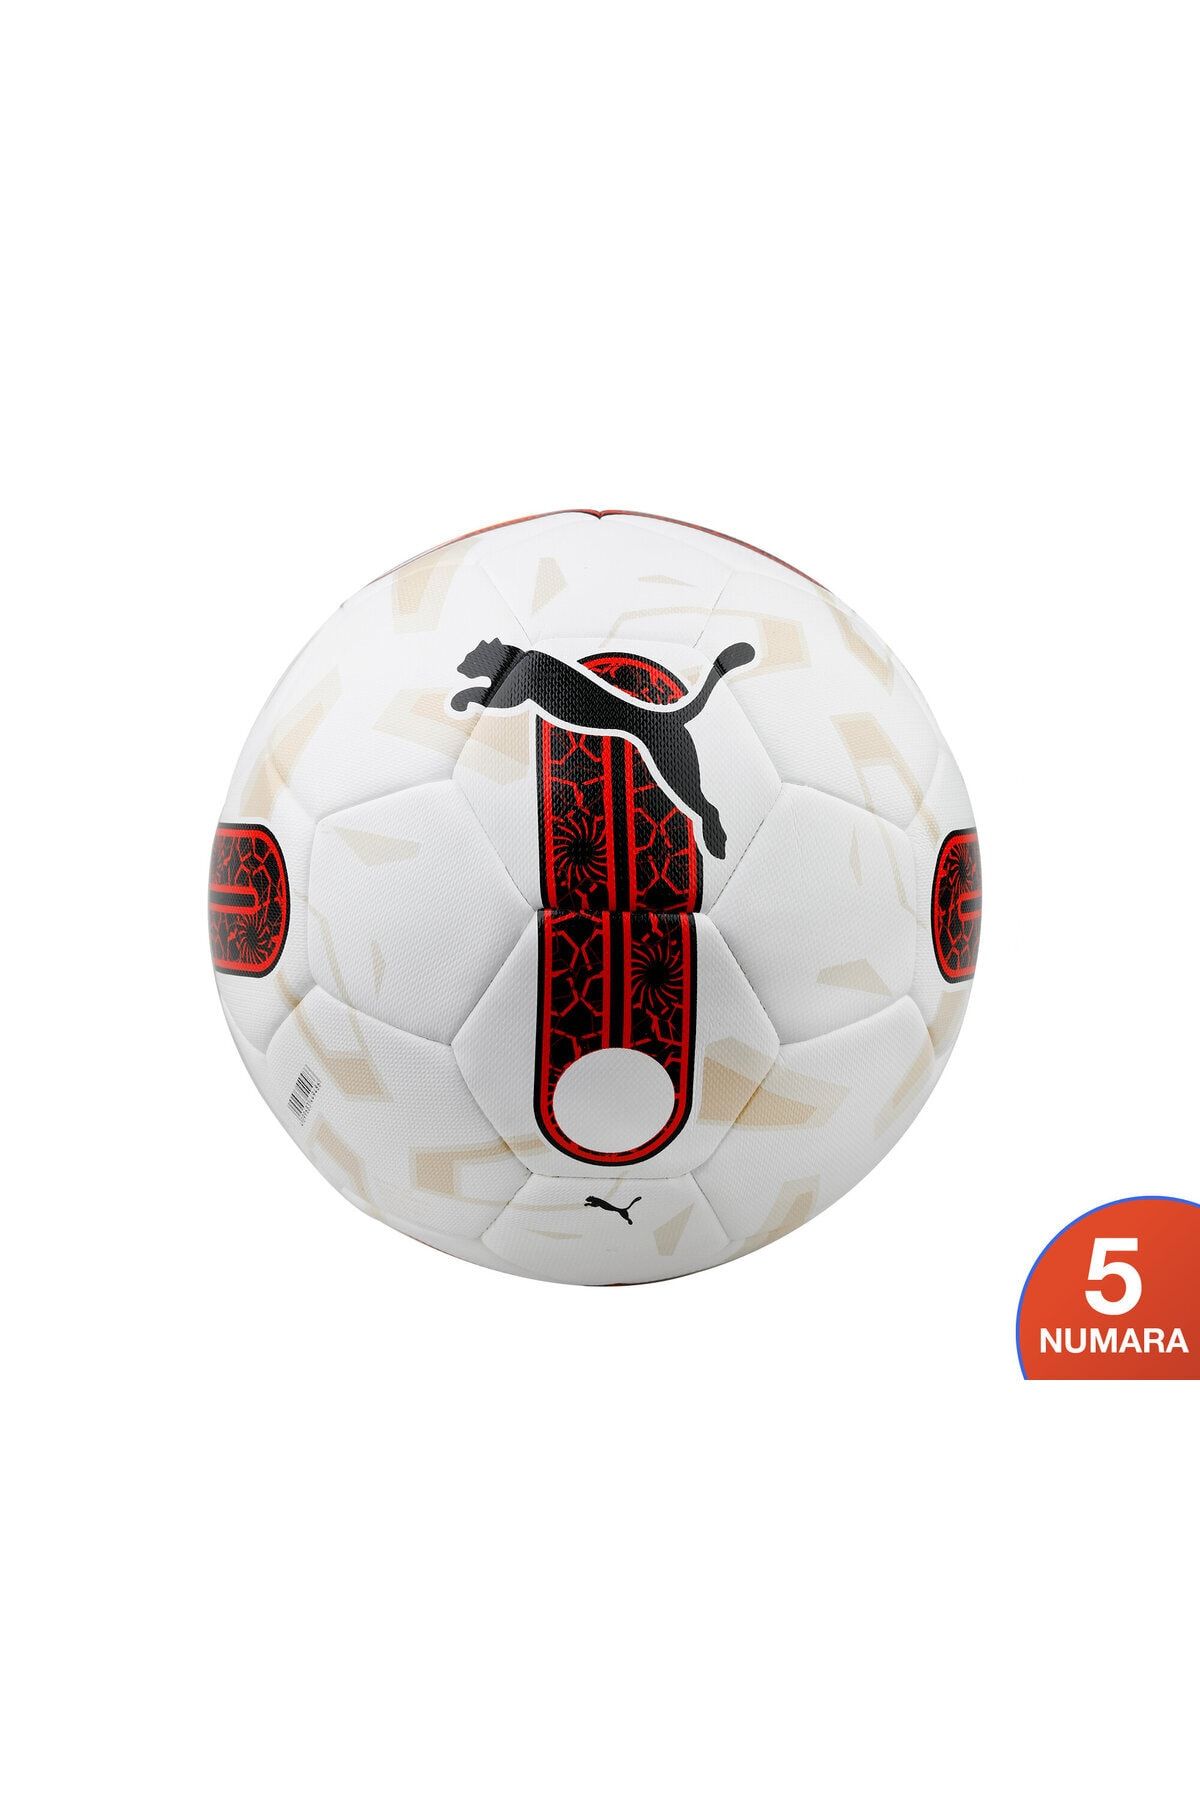 Puma Orbita Süper Lig 4 (Fifa Basic) Futbol Topu 8419601 Krem